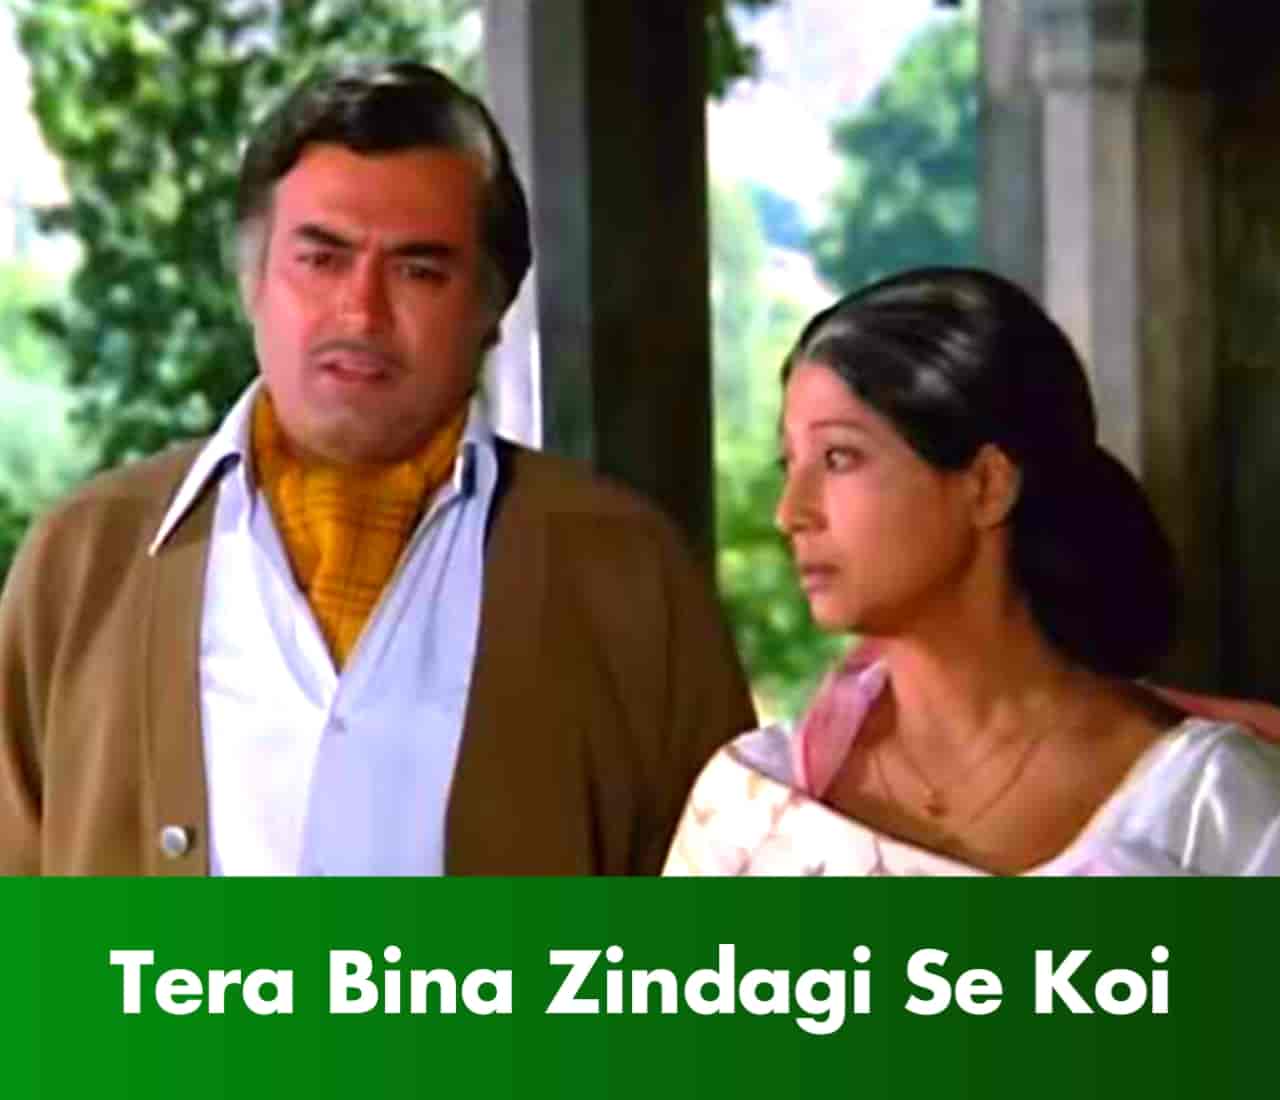 Tera bina zindagi se koi Hindi Sad Song Lyrics, Sung By Lata Mangeshkar and Kishor Kumar.